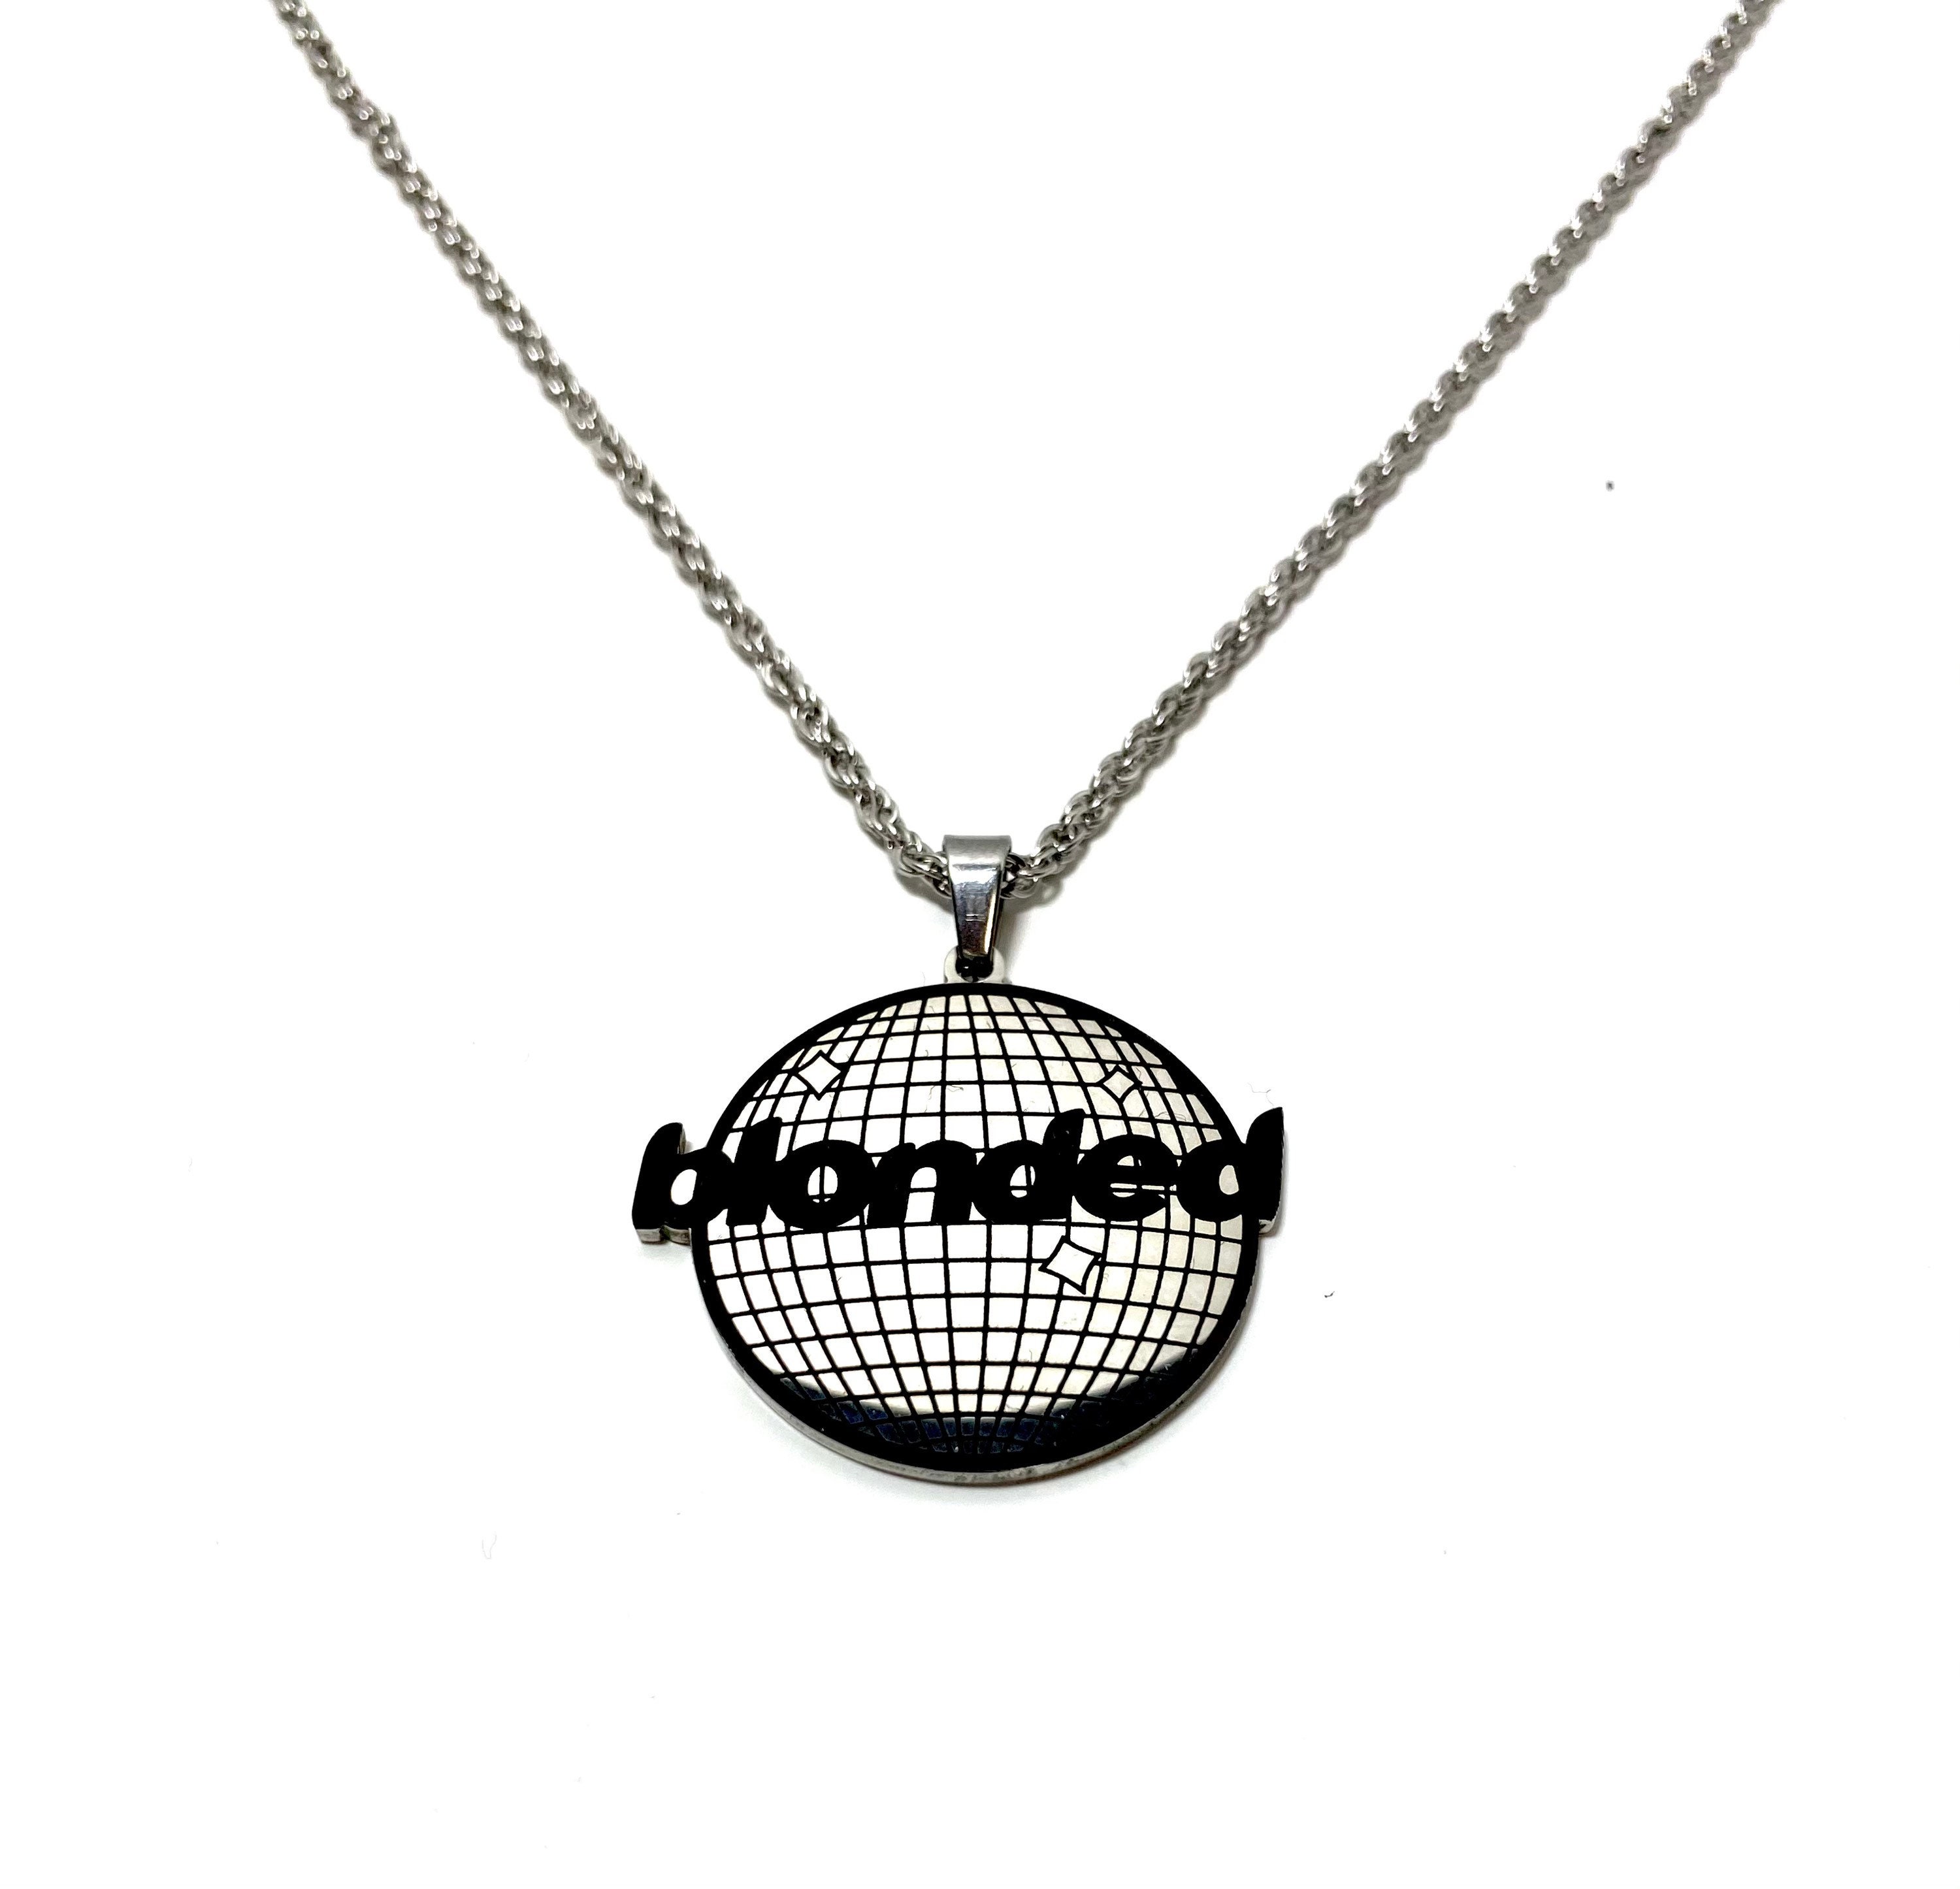 Frank n Furter Pig Portait Acrylic Necklace – Little Pig Jewellery Design